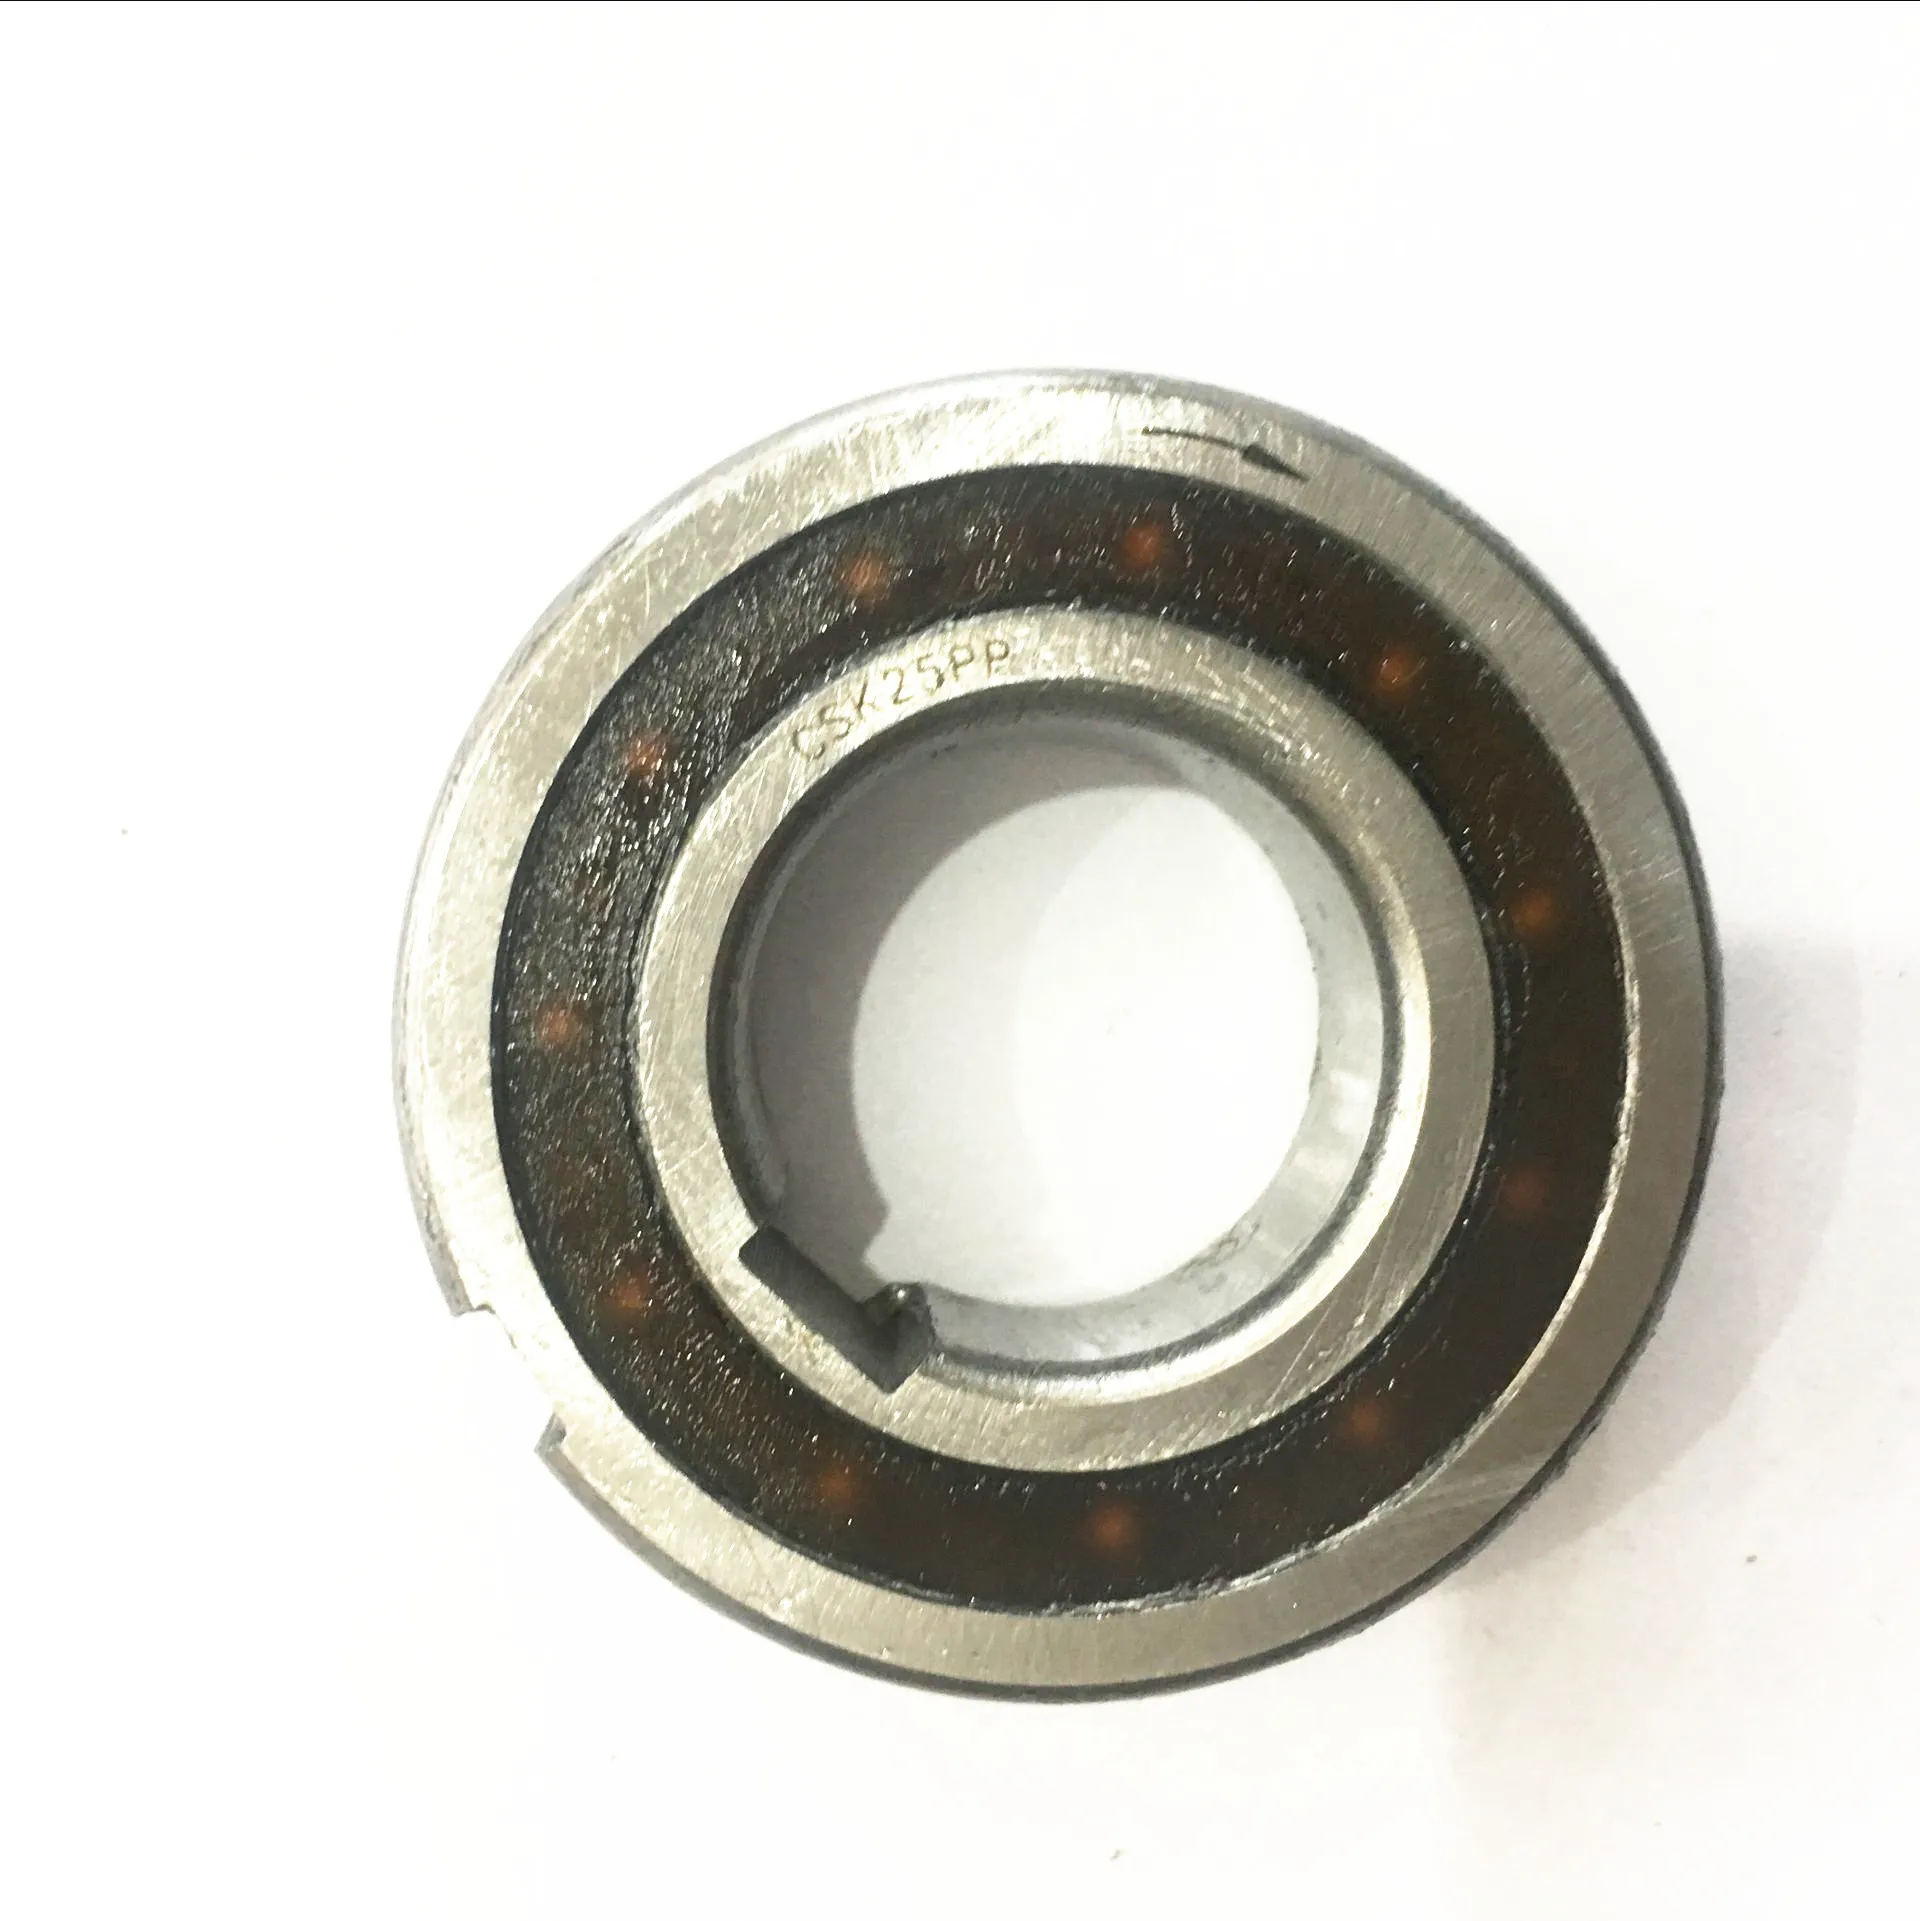 CSK20P 20mm Sprag Clutch Bearing Internal Keyway Free UK Postage